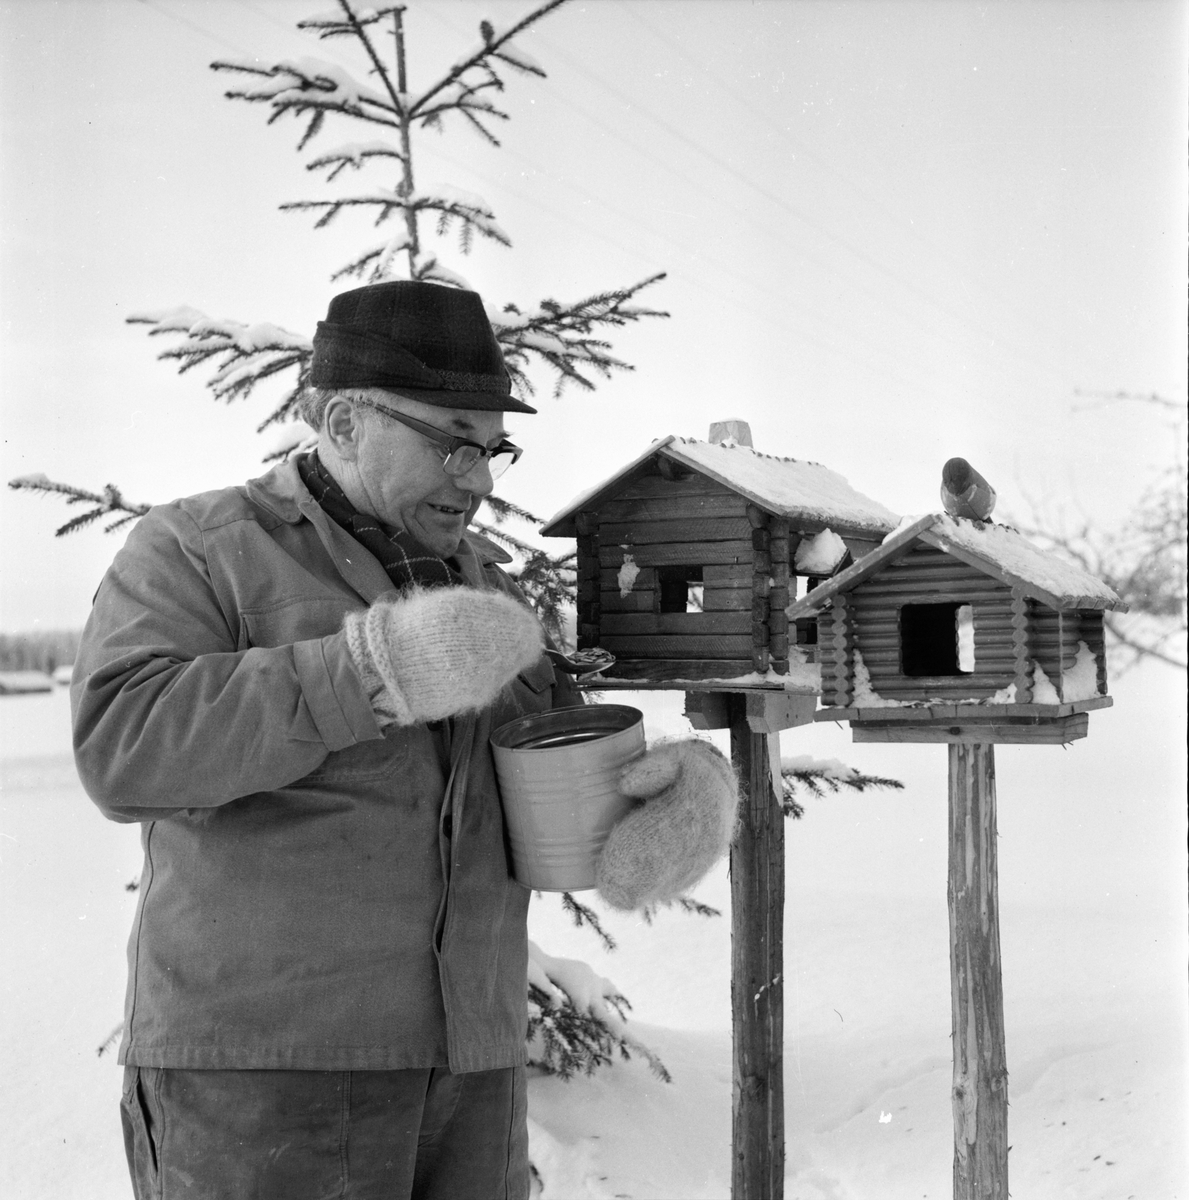 Rådjurshjälpen sjuk get. Växsjö
Einar Bungs Röste
7/2-1966